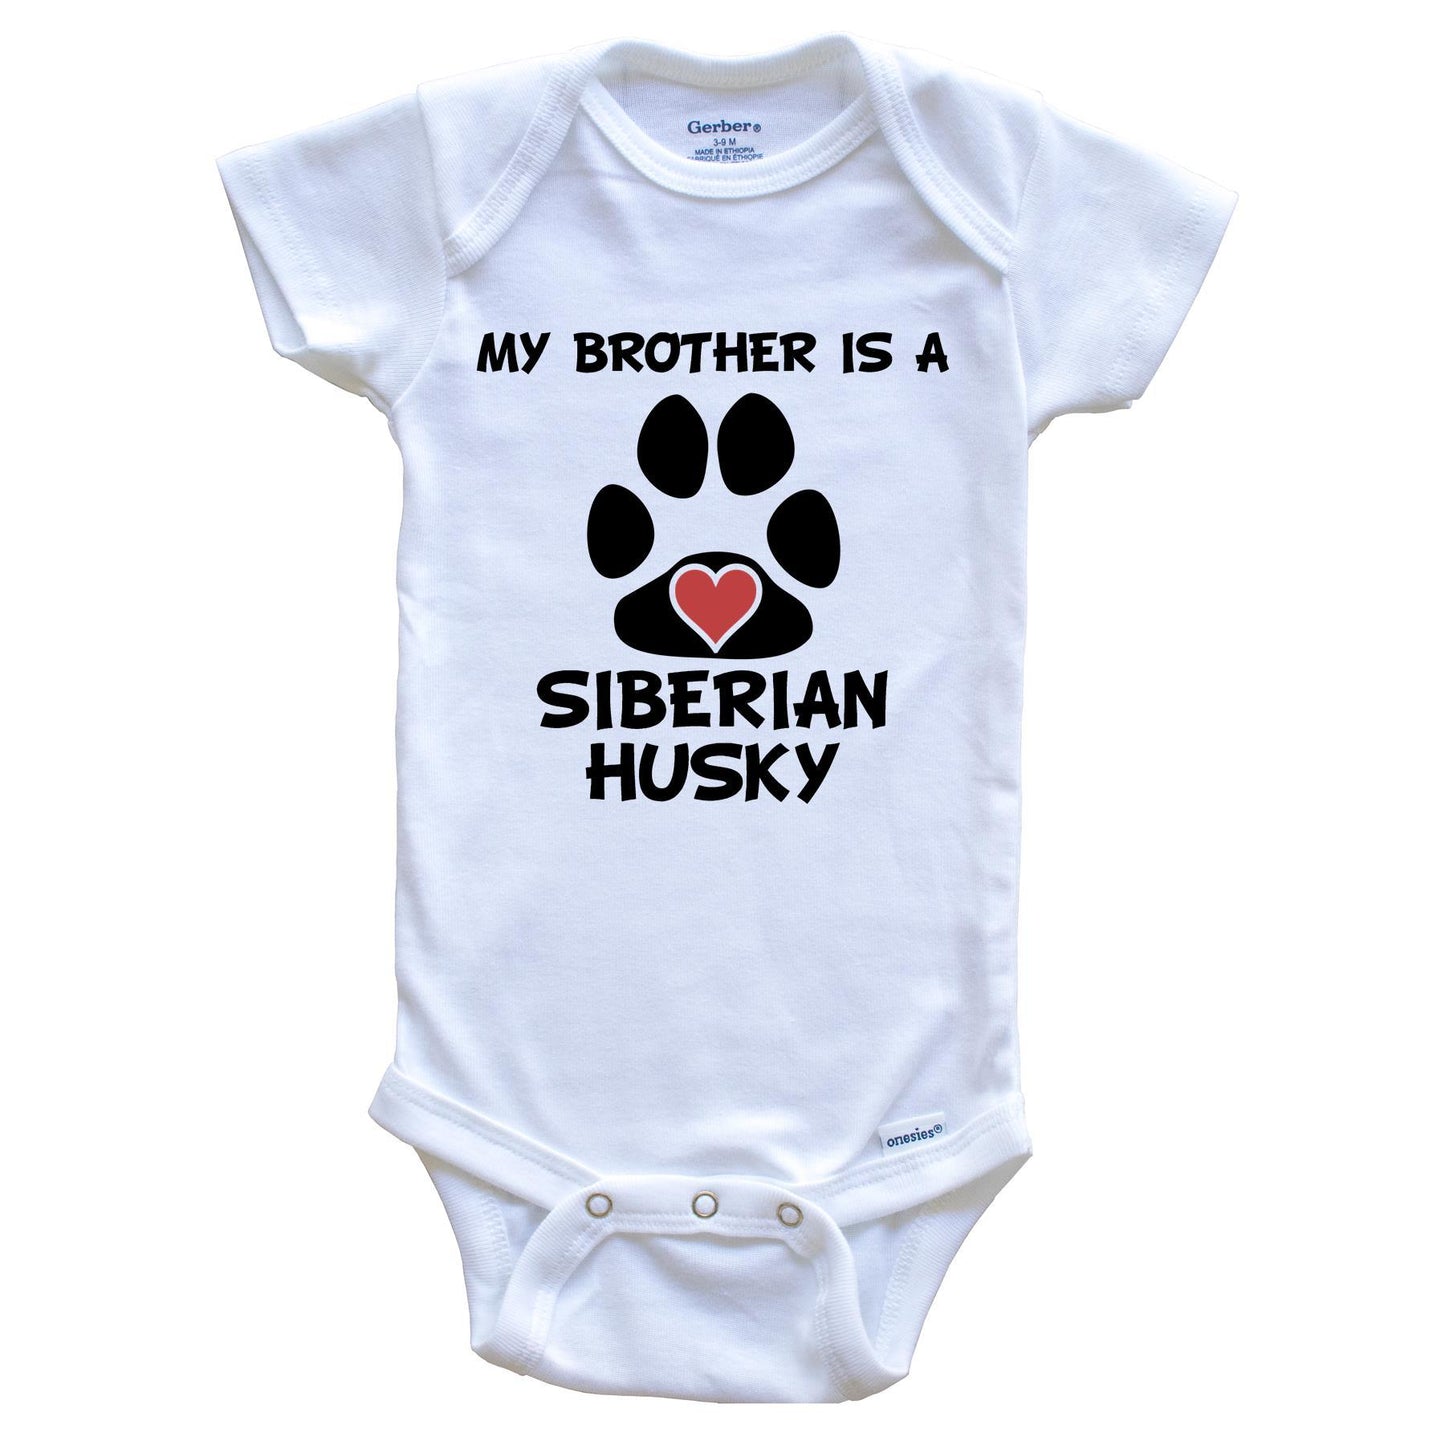 My Brother Is A Siberian Husky Baby Onesie